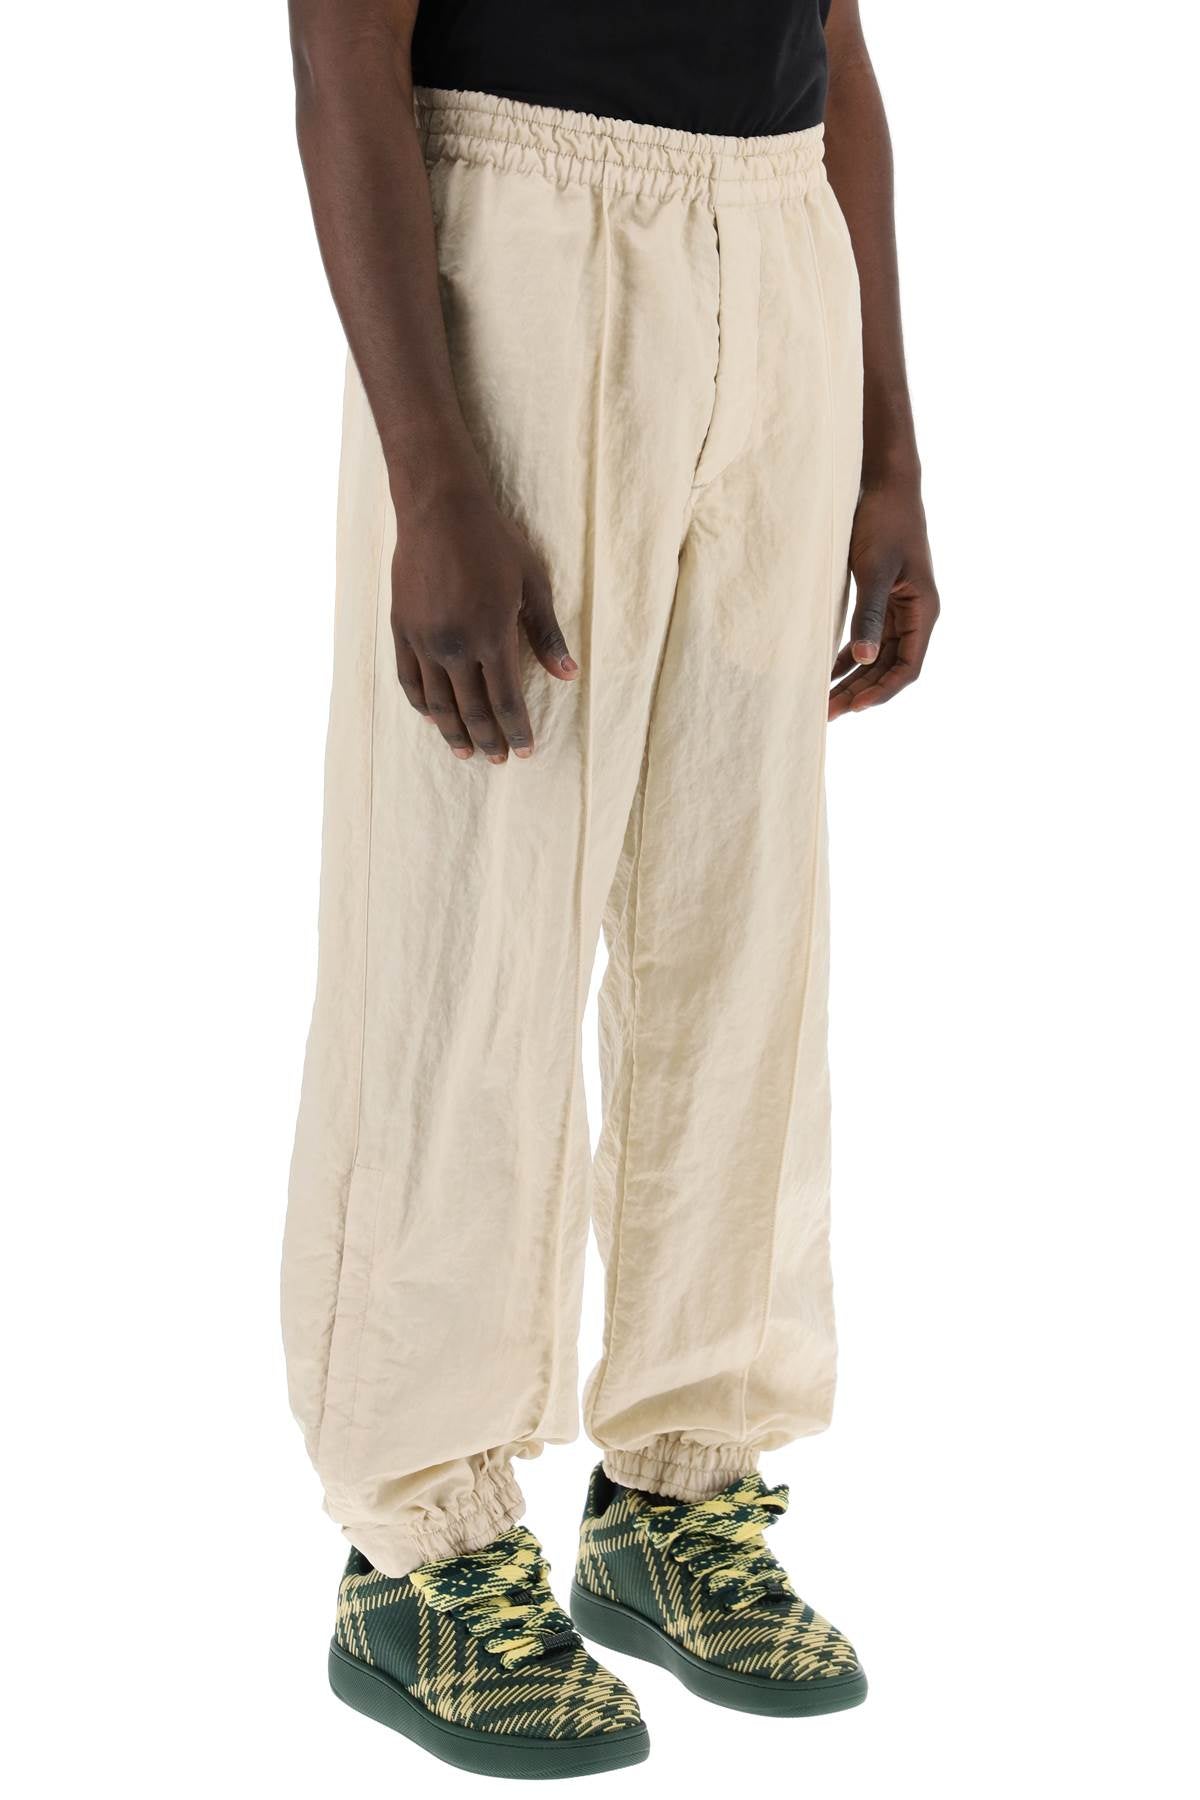 Burberry "textured nylon joggers-men > clothing > trousers > joggers-Burberry-Urbanheer